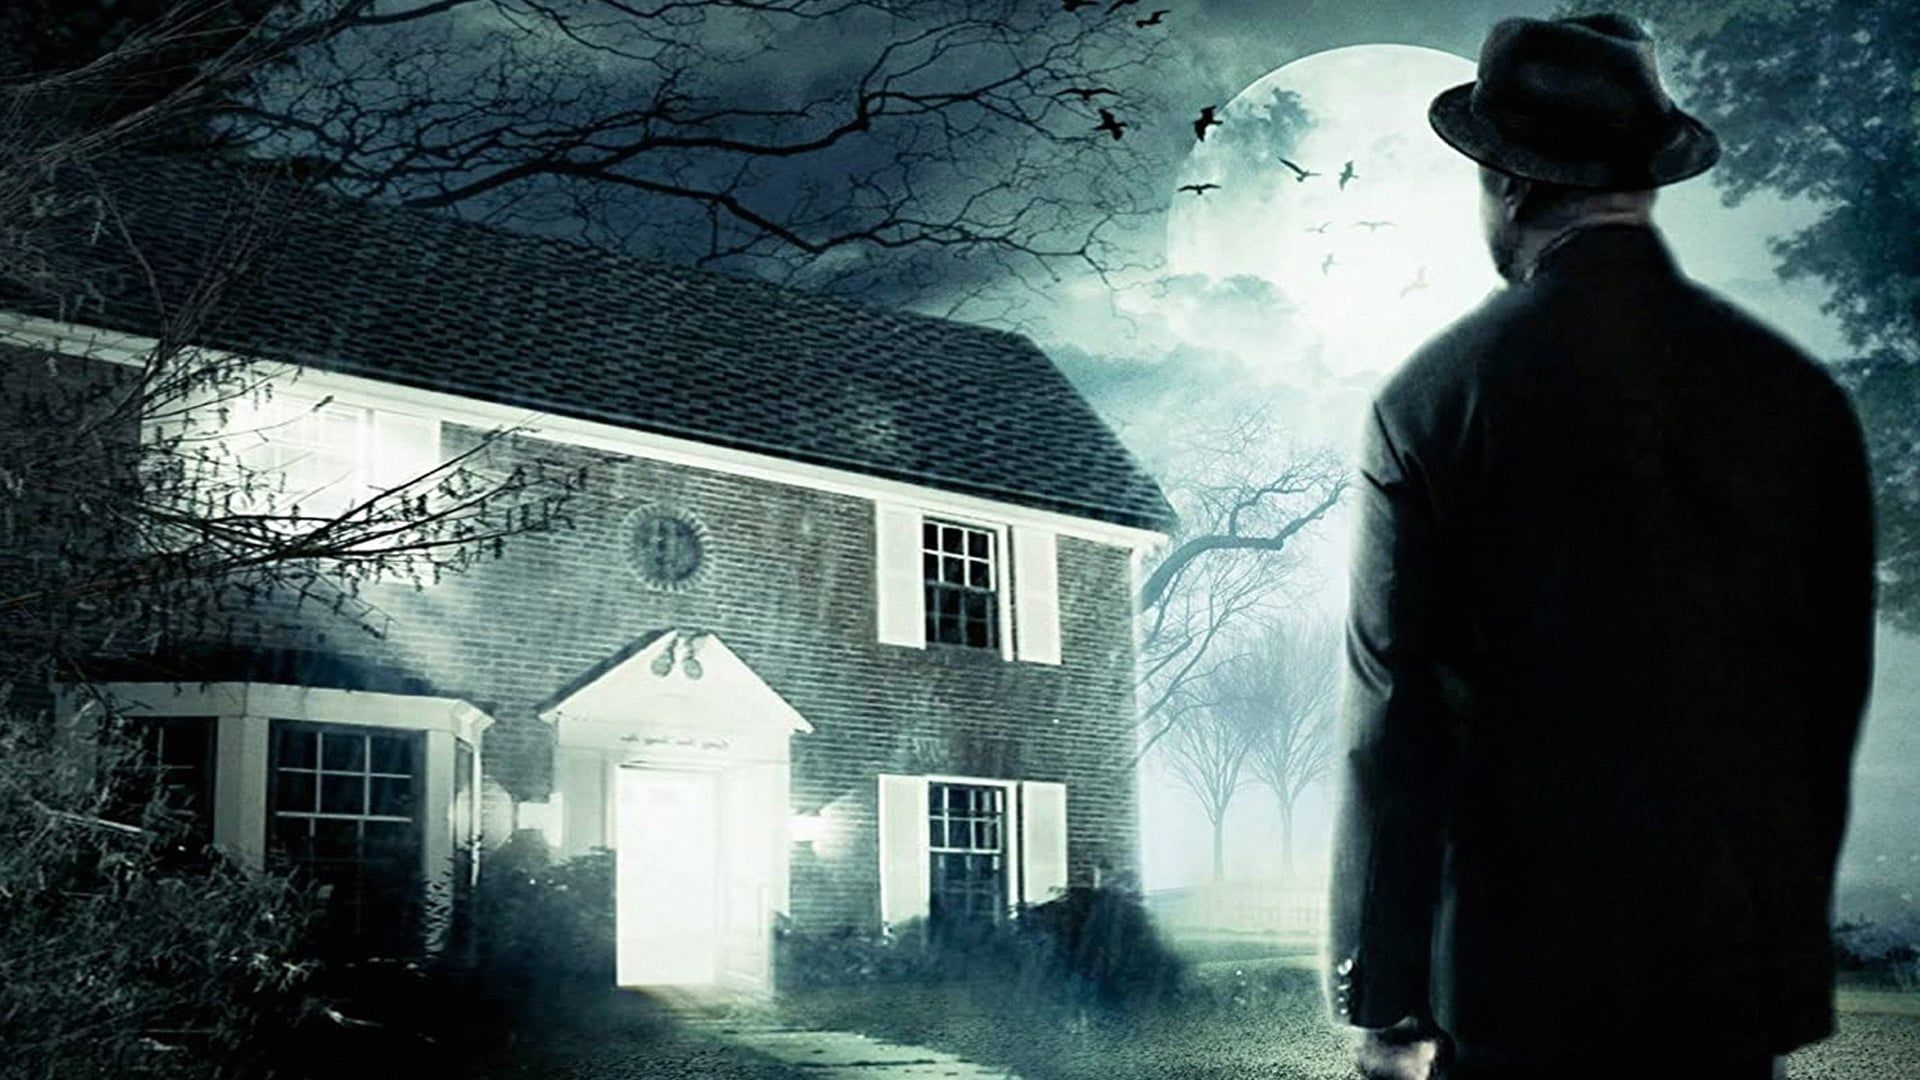 Exorcist: House of Evil background